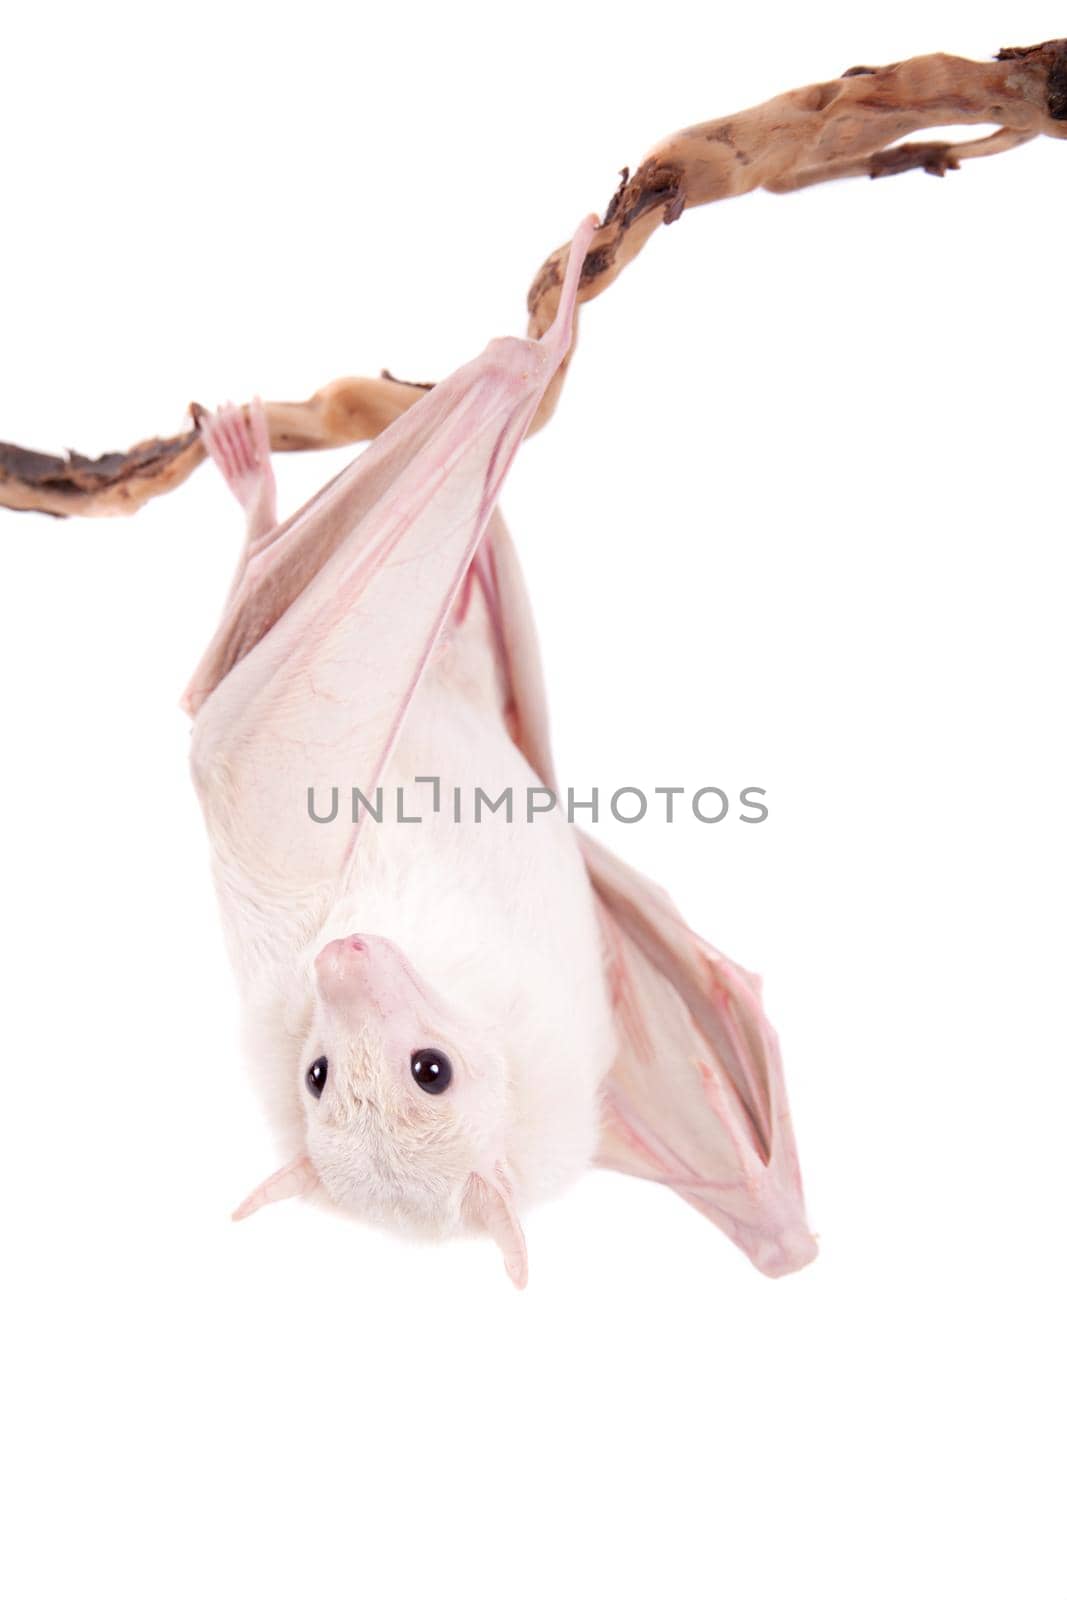 Egyptian fruit bat isolated on white by RosaJay